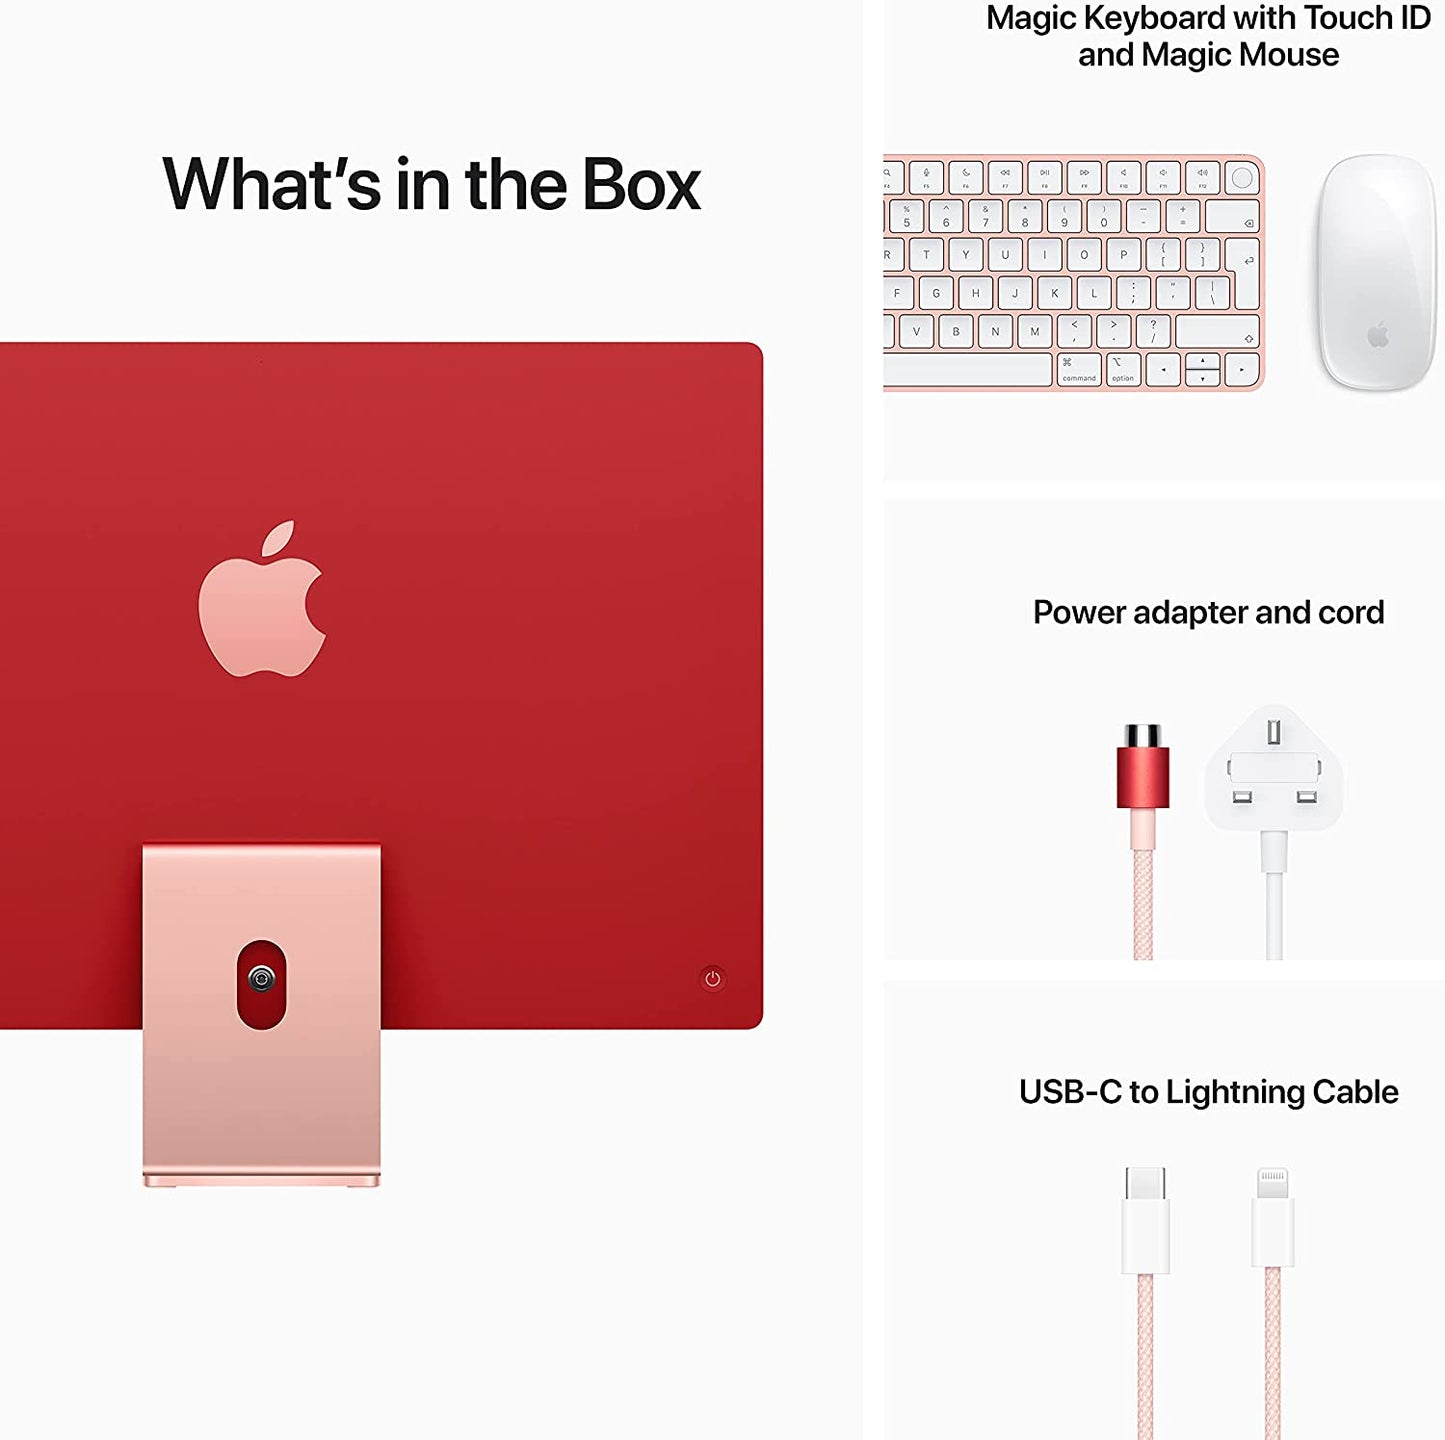 2021 Apple iMac (24-inch, M1 chip with 8‑Core CPU and 8‑Core GPU, 8GB RAM, 256GB) - Pink